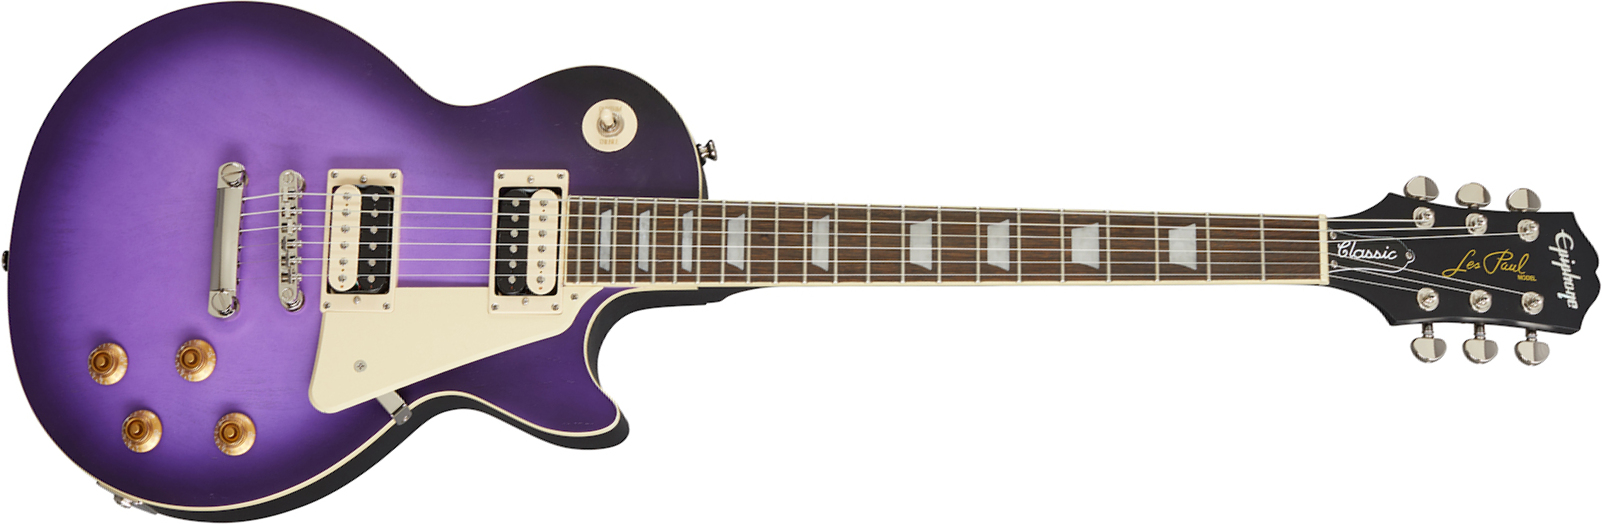 Epiphone Les Paul Classic 2h Ht Rw - Worn Purple - Single cut electric guitar - Main picture